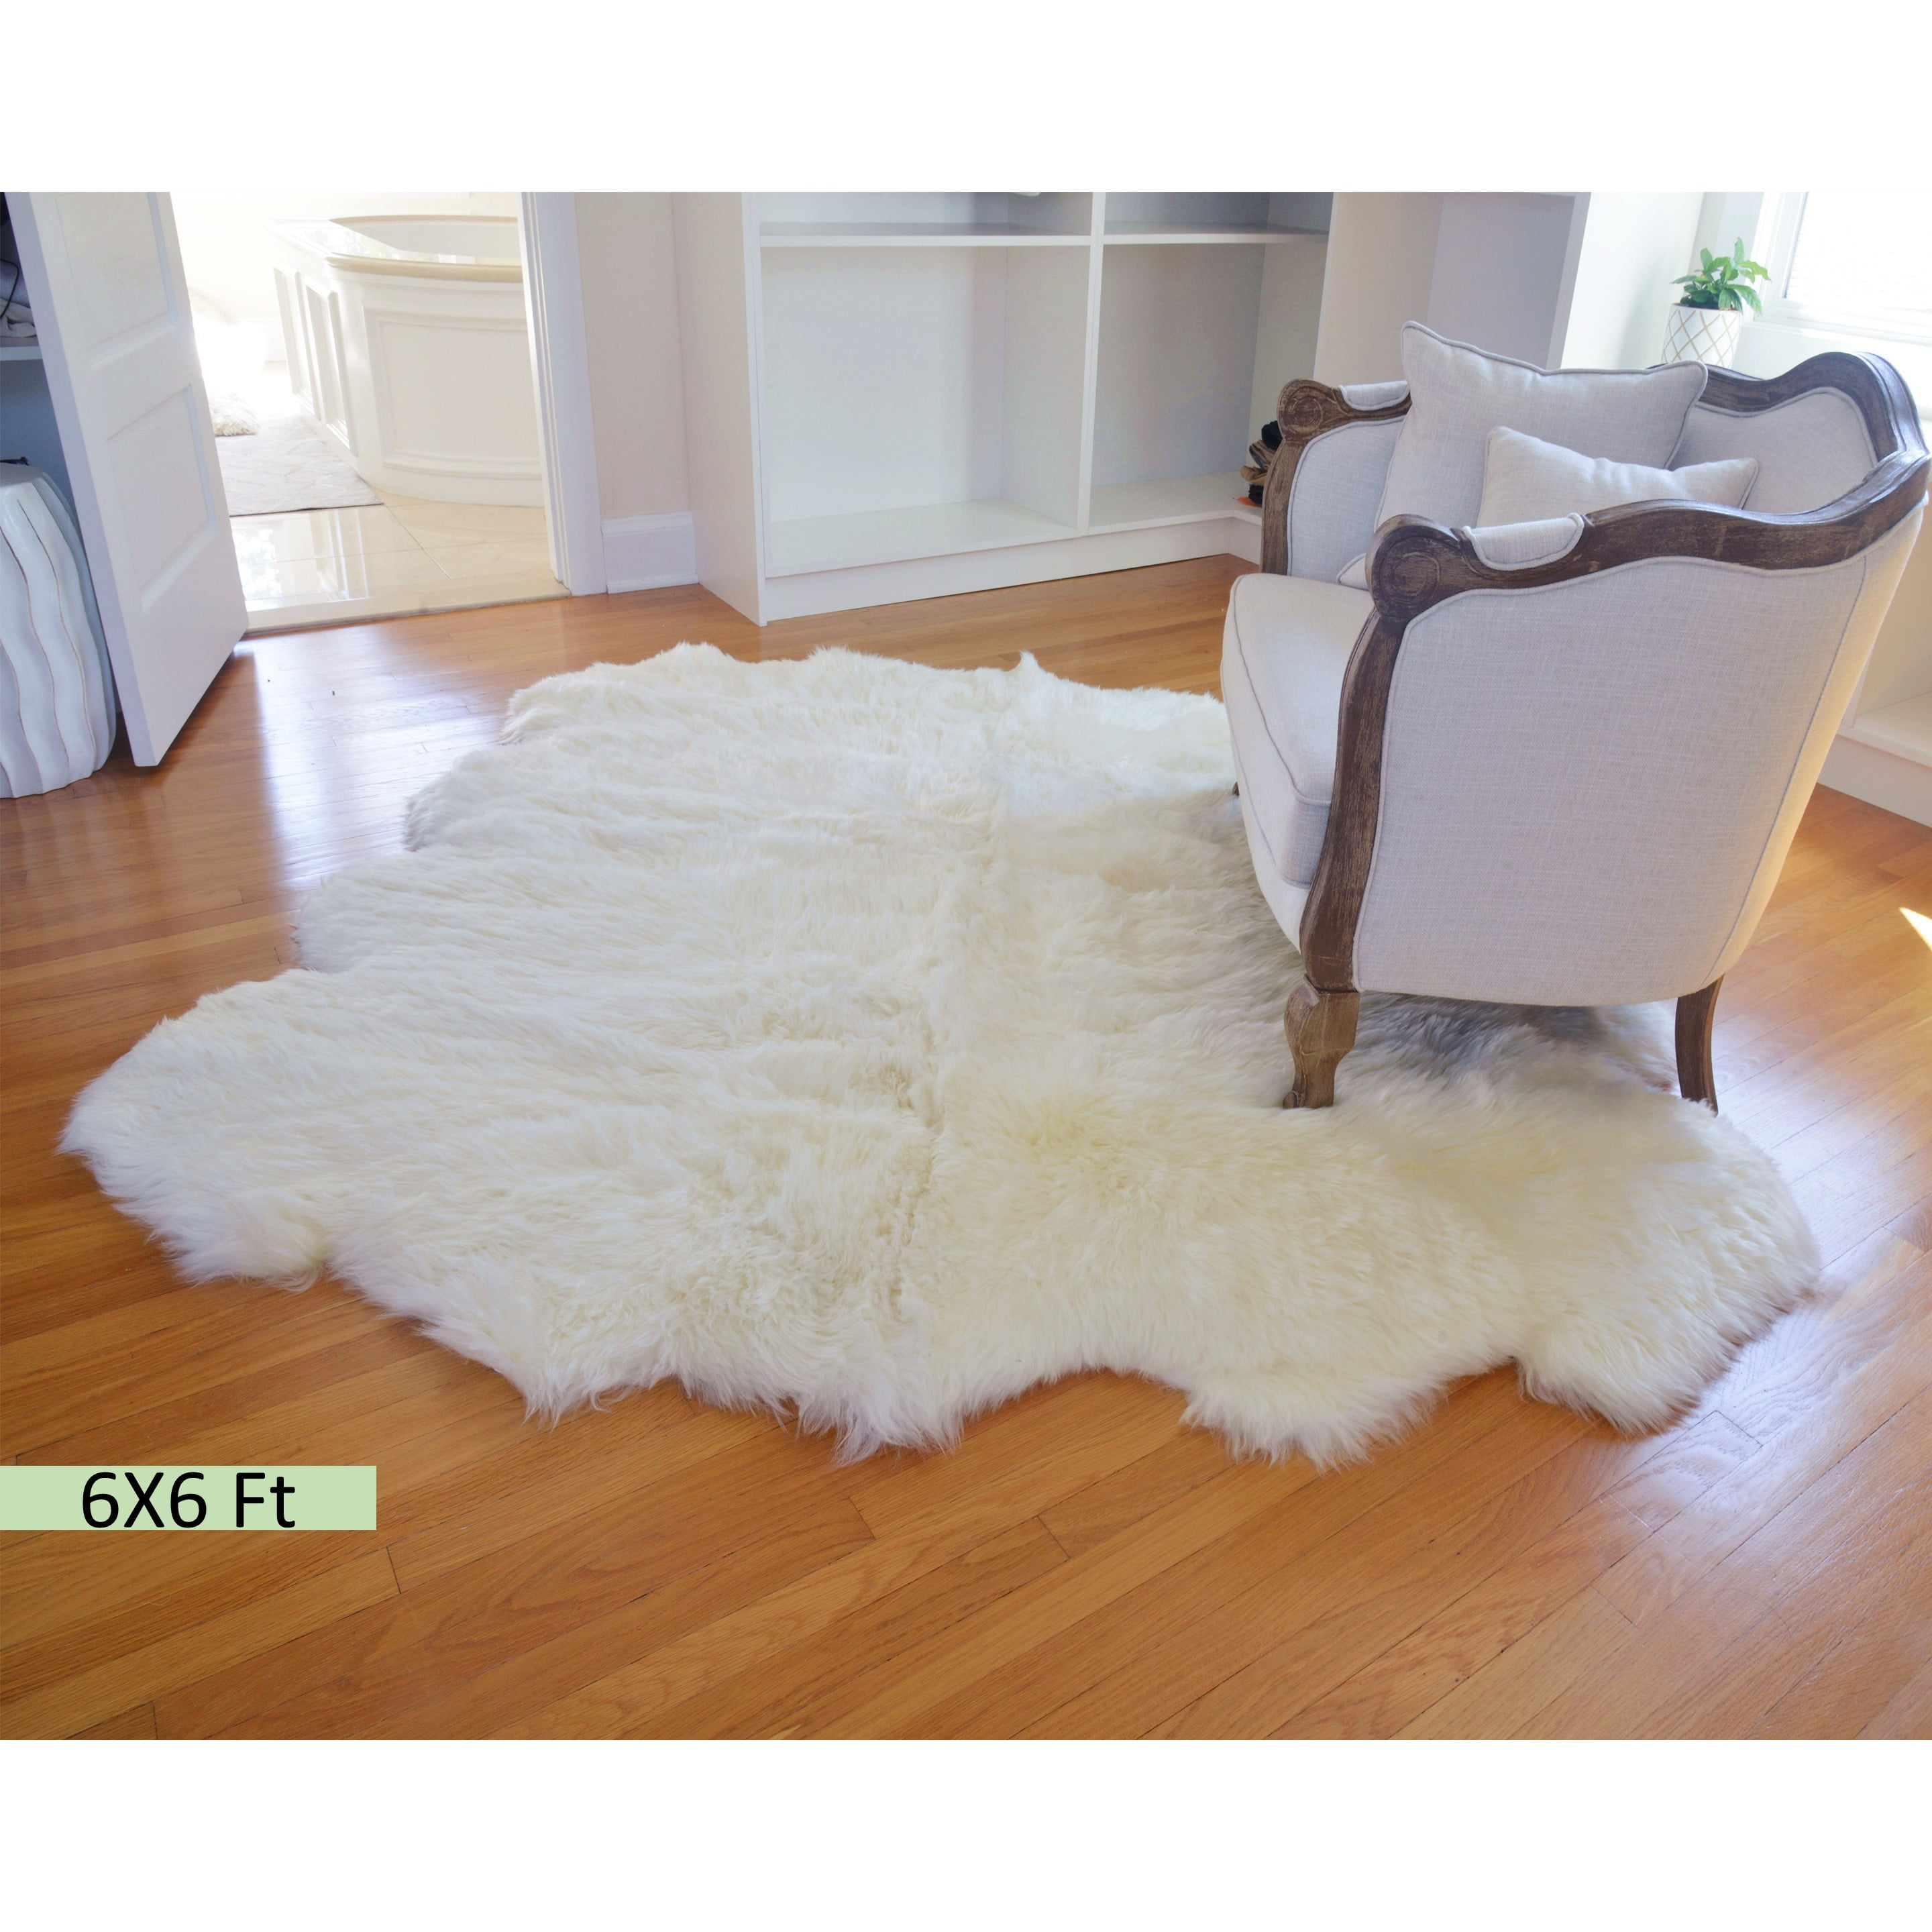 100% Real Genuine Sheepskin Rugs Natural Lambskin Baby Play Mats Soft Fur Carpet 